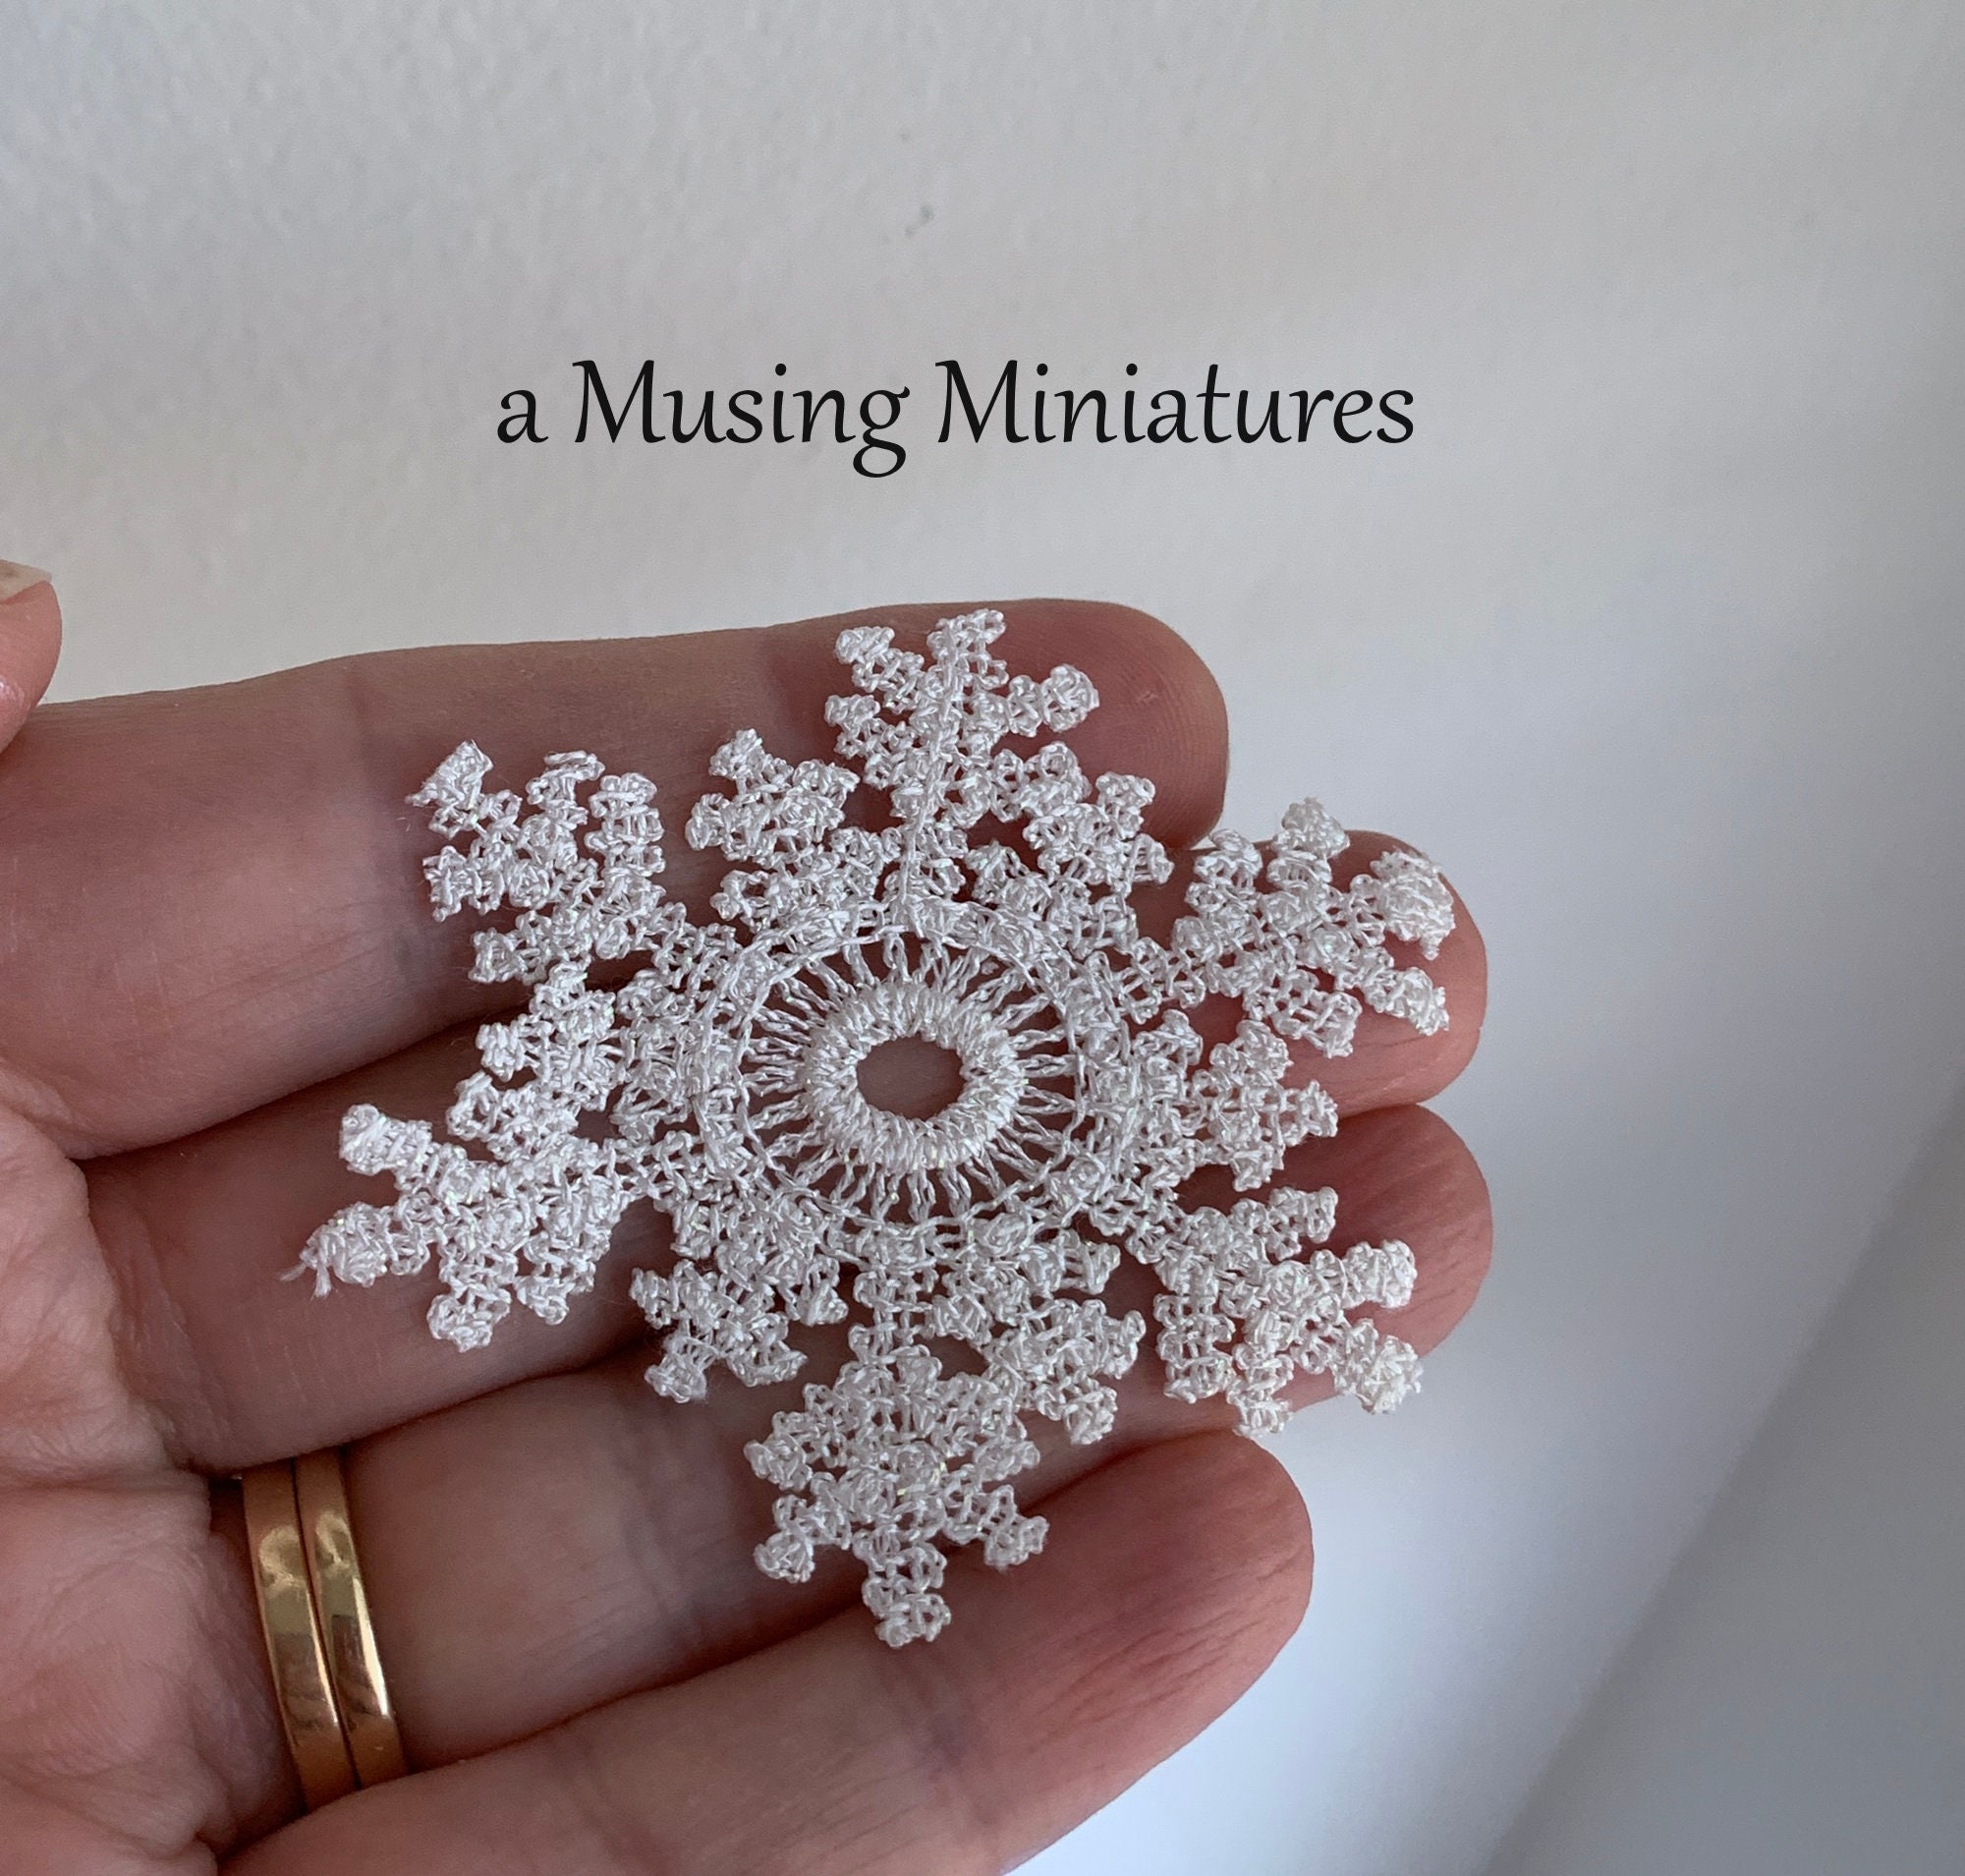 10 Clear Acrylic Snowflakes Embellishments, Miniature Snowflakes